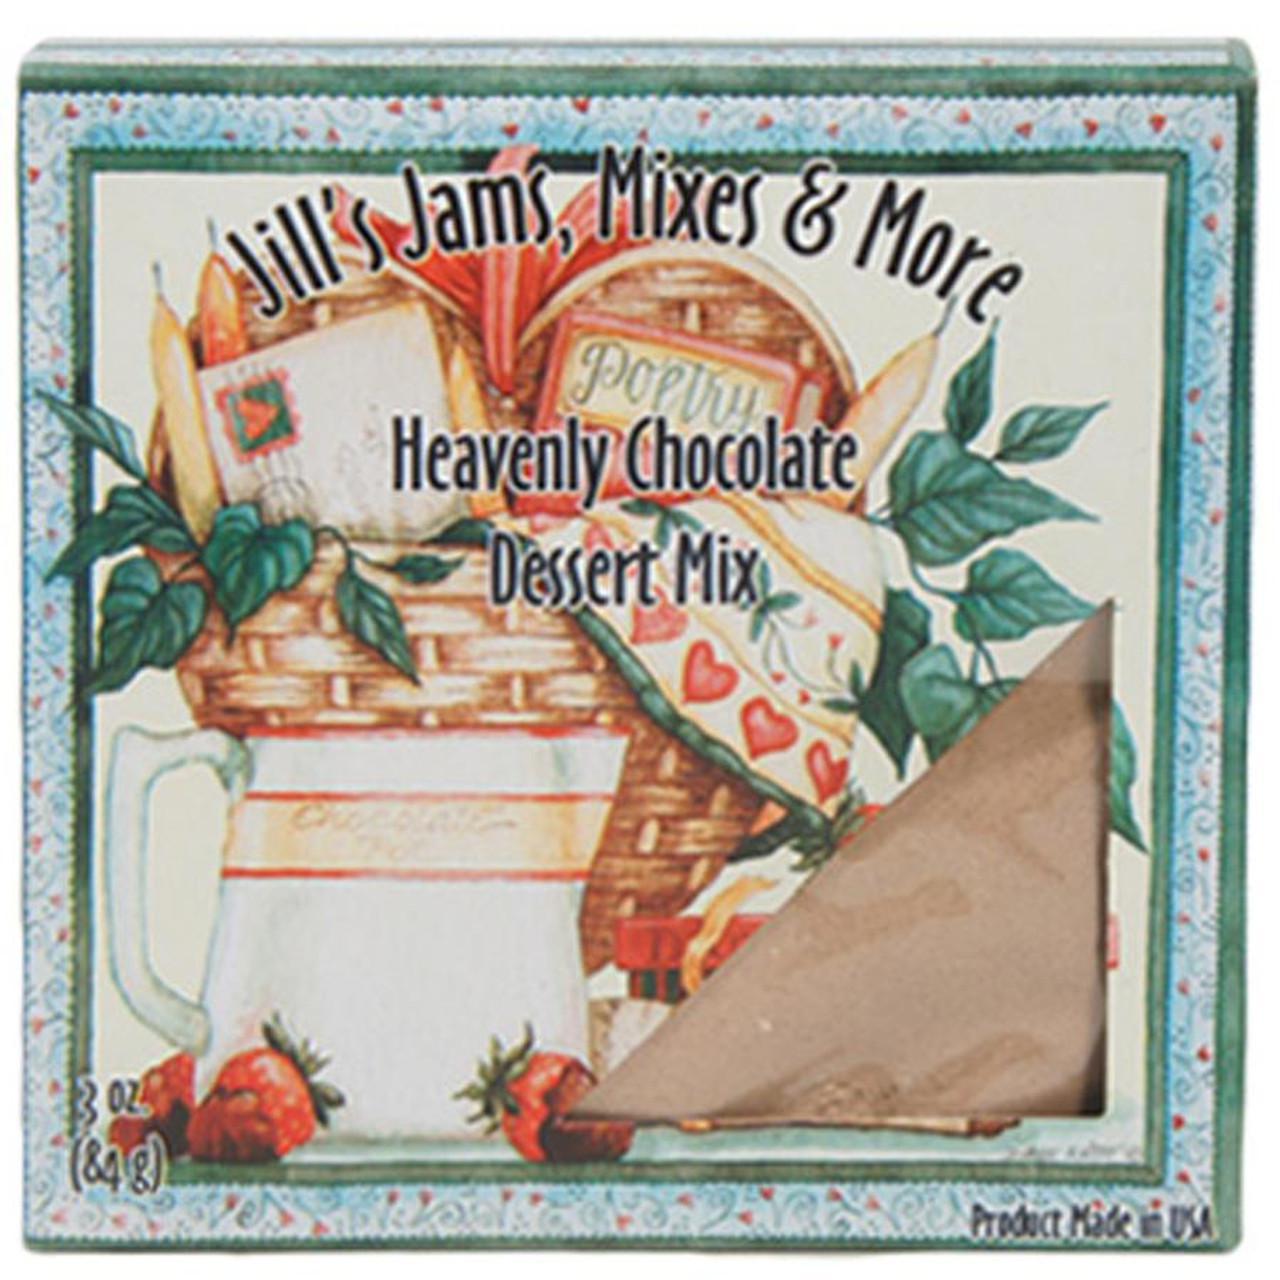 Jill's Jams, Mixes & More Heavenly Chocolate Dessert Mix